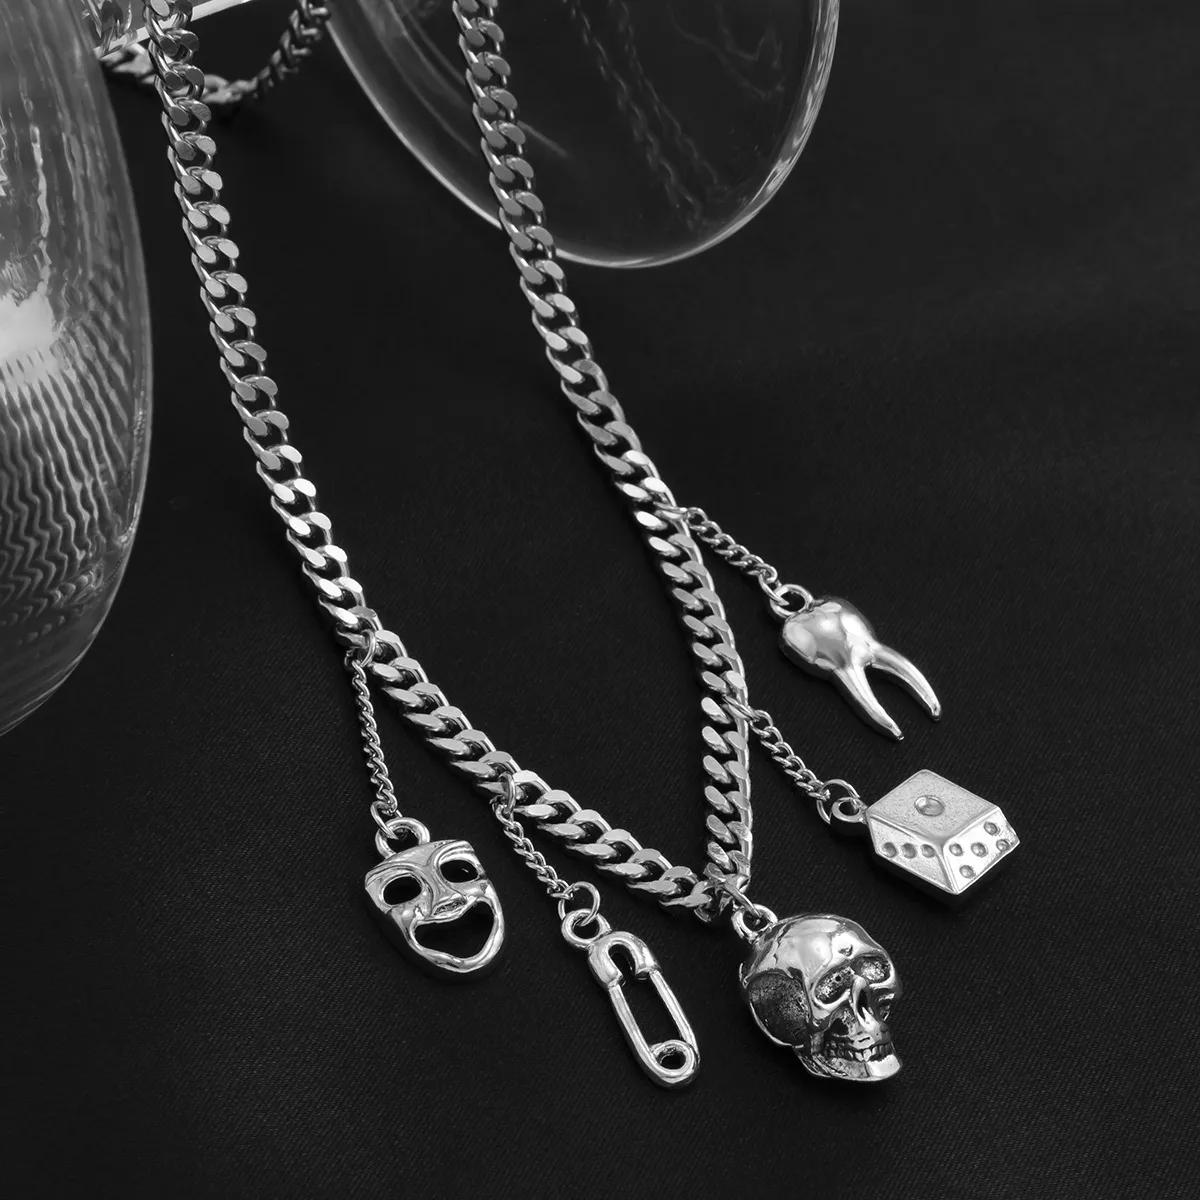 Vintage Pearl Heart Slull Charms Halsband Choker Y2K Eesthetic Gold Cuban Link Chain for Women 2022 New Fashion Jewelry Accessories Mamma gåvor Födelsedag för damer